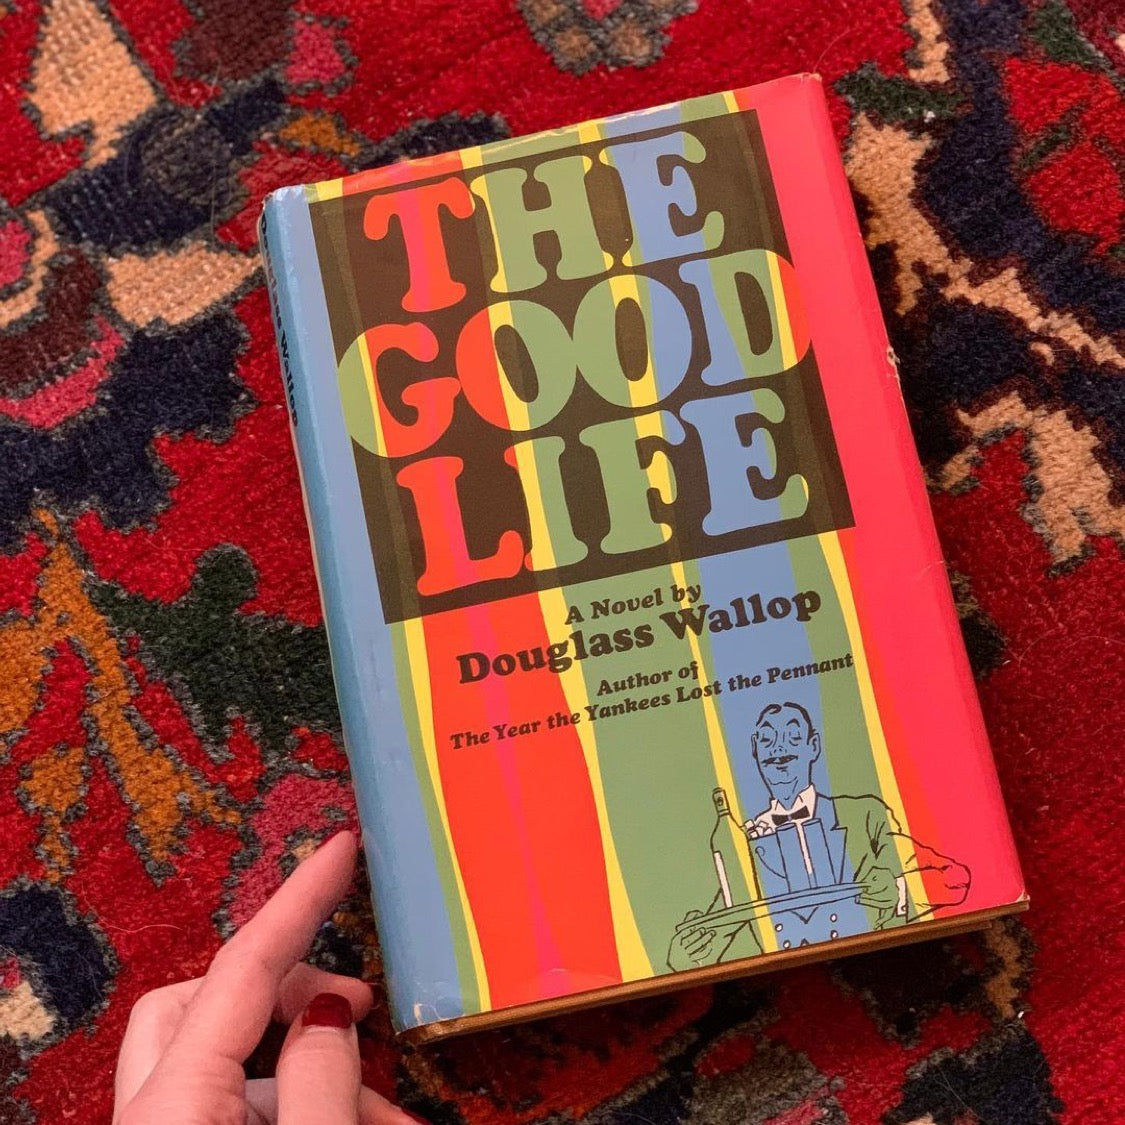 The Good Life (1968)